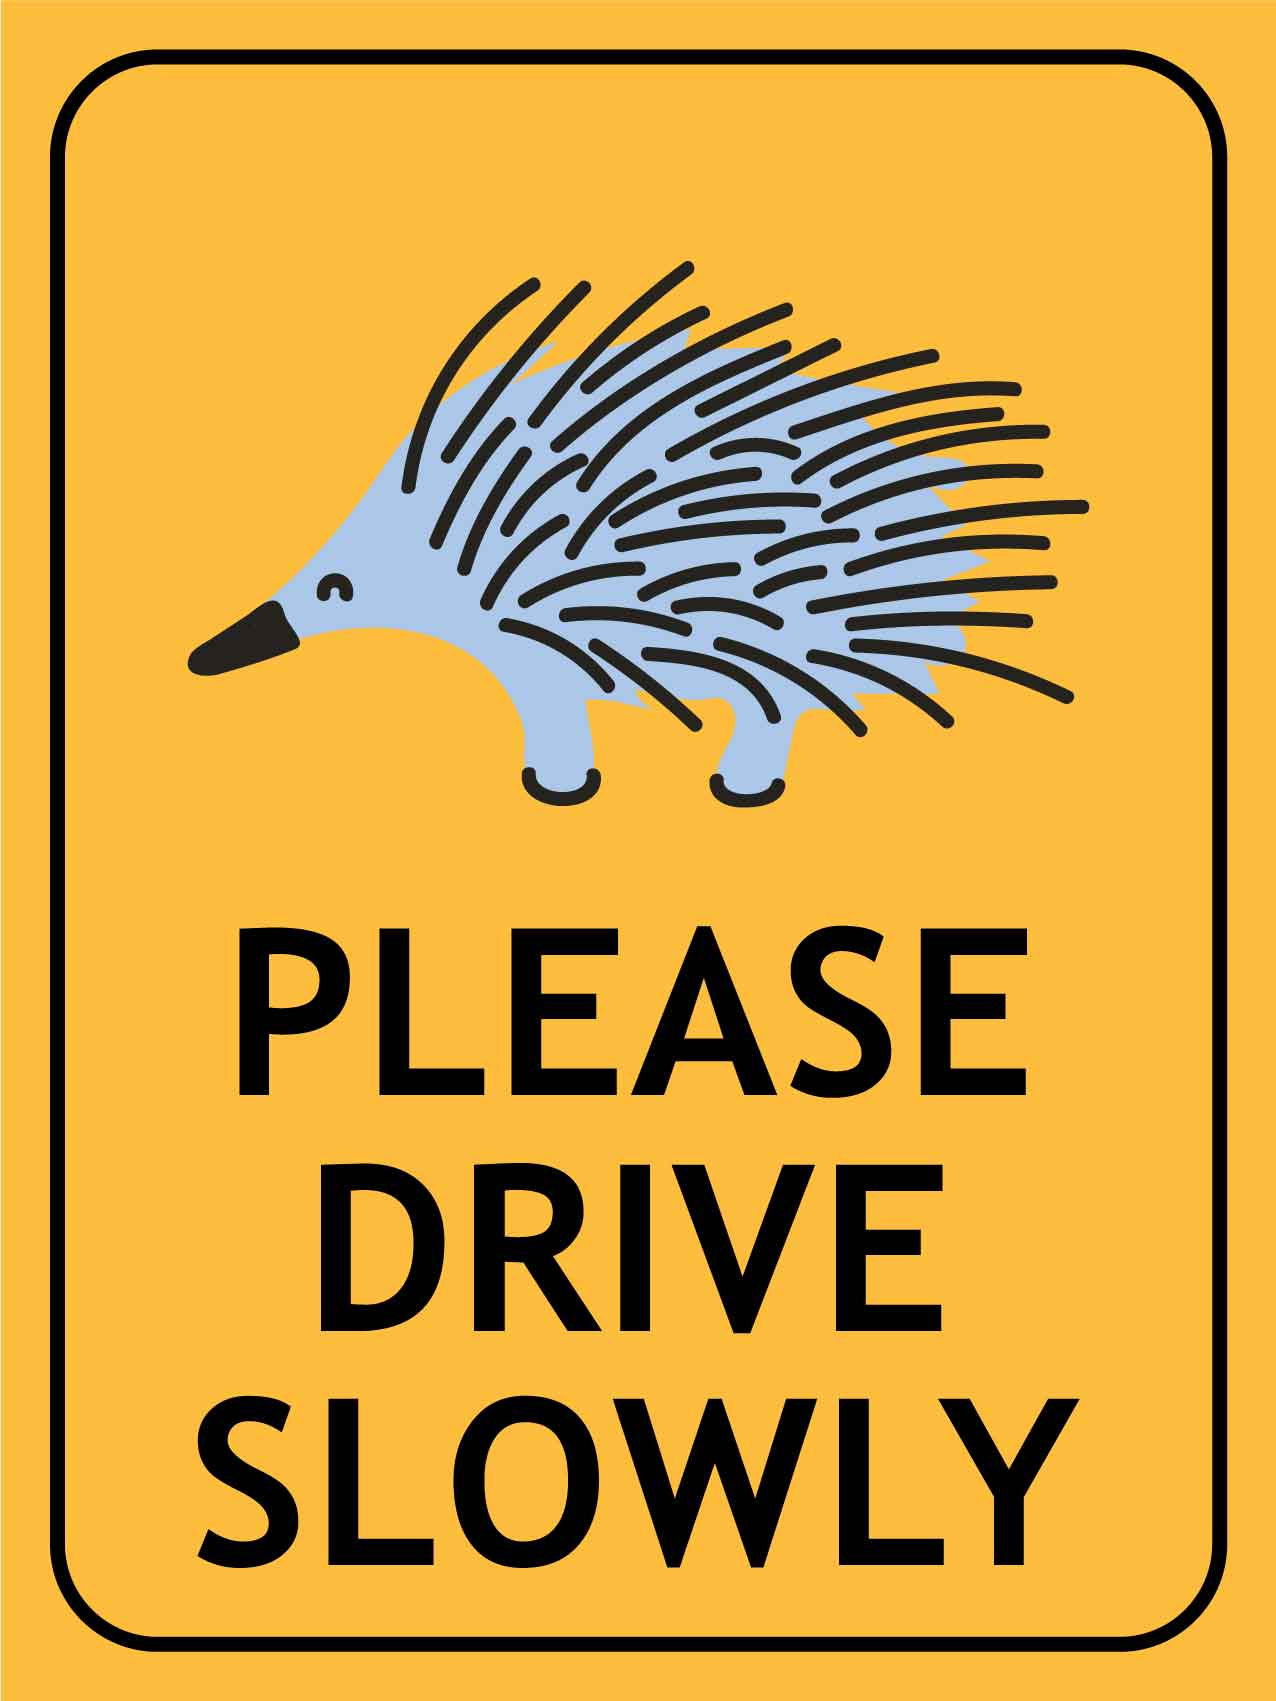 Echidna Cartoon Please Drive Slowly Sign